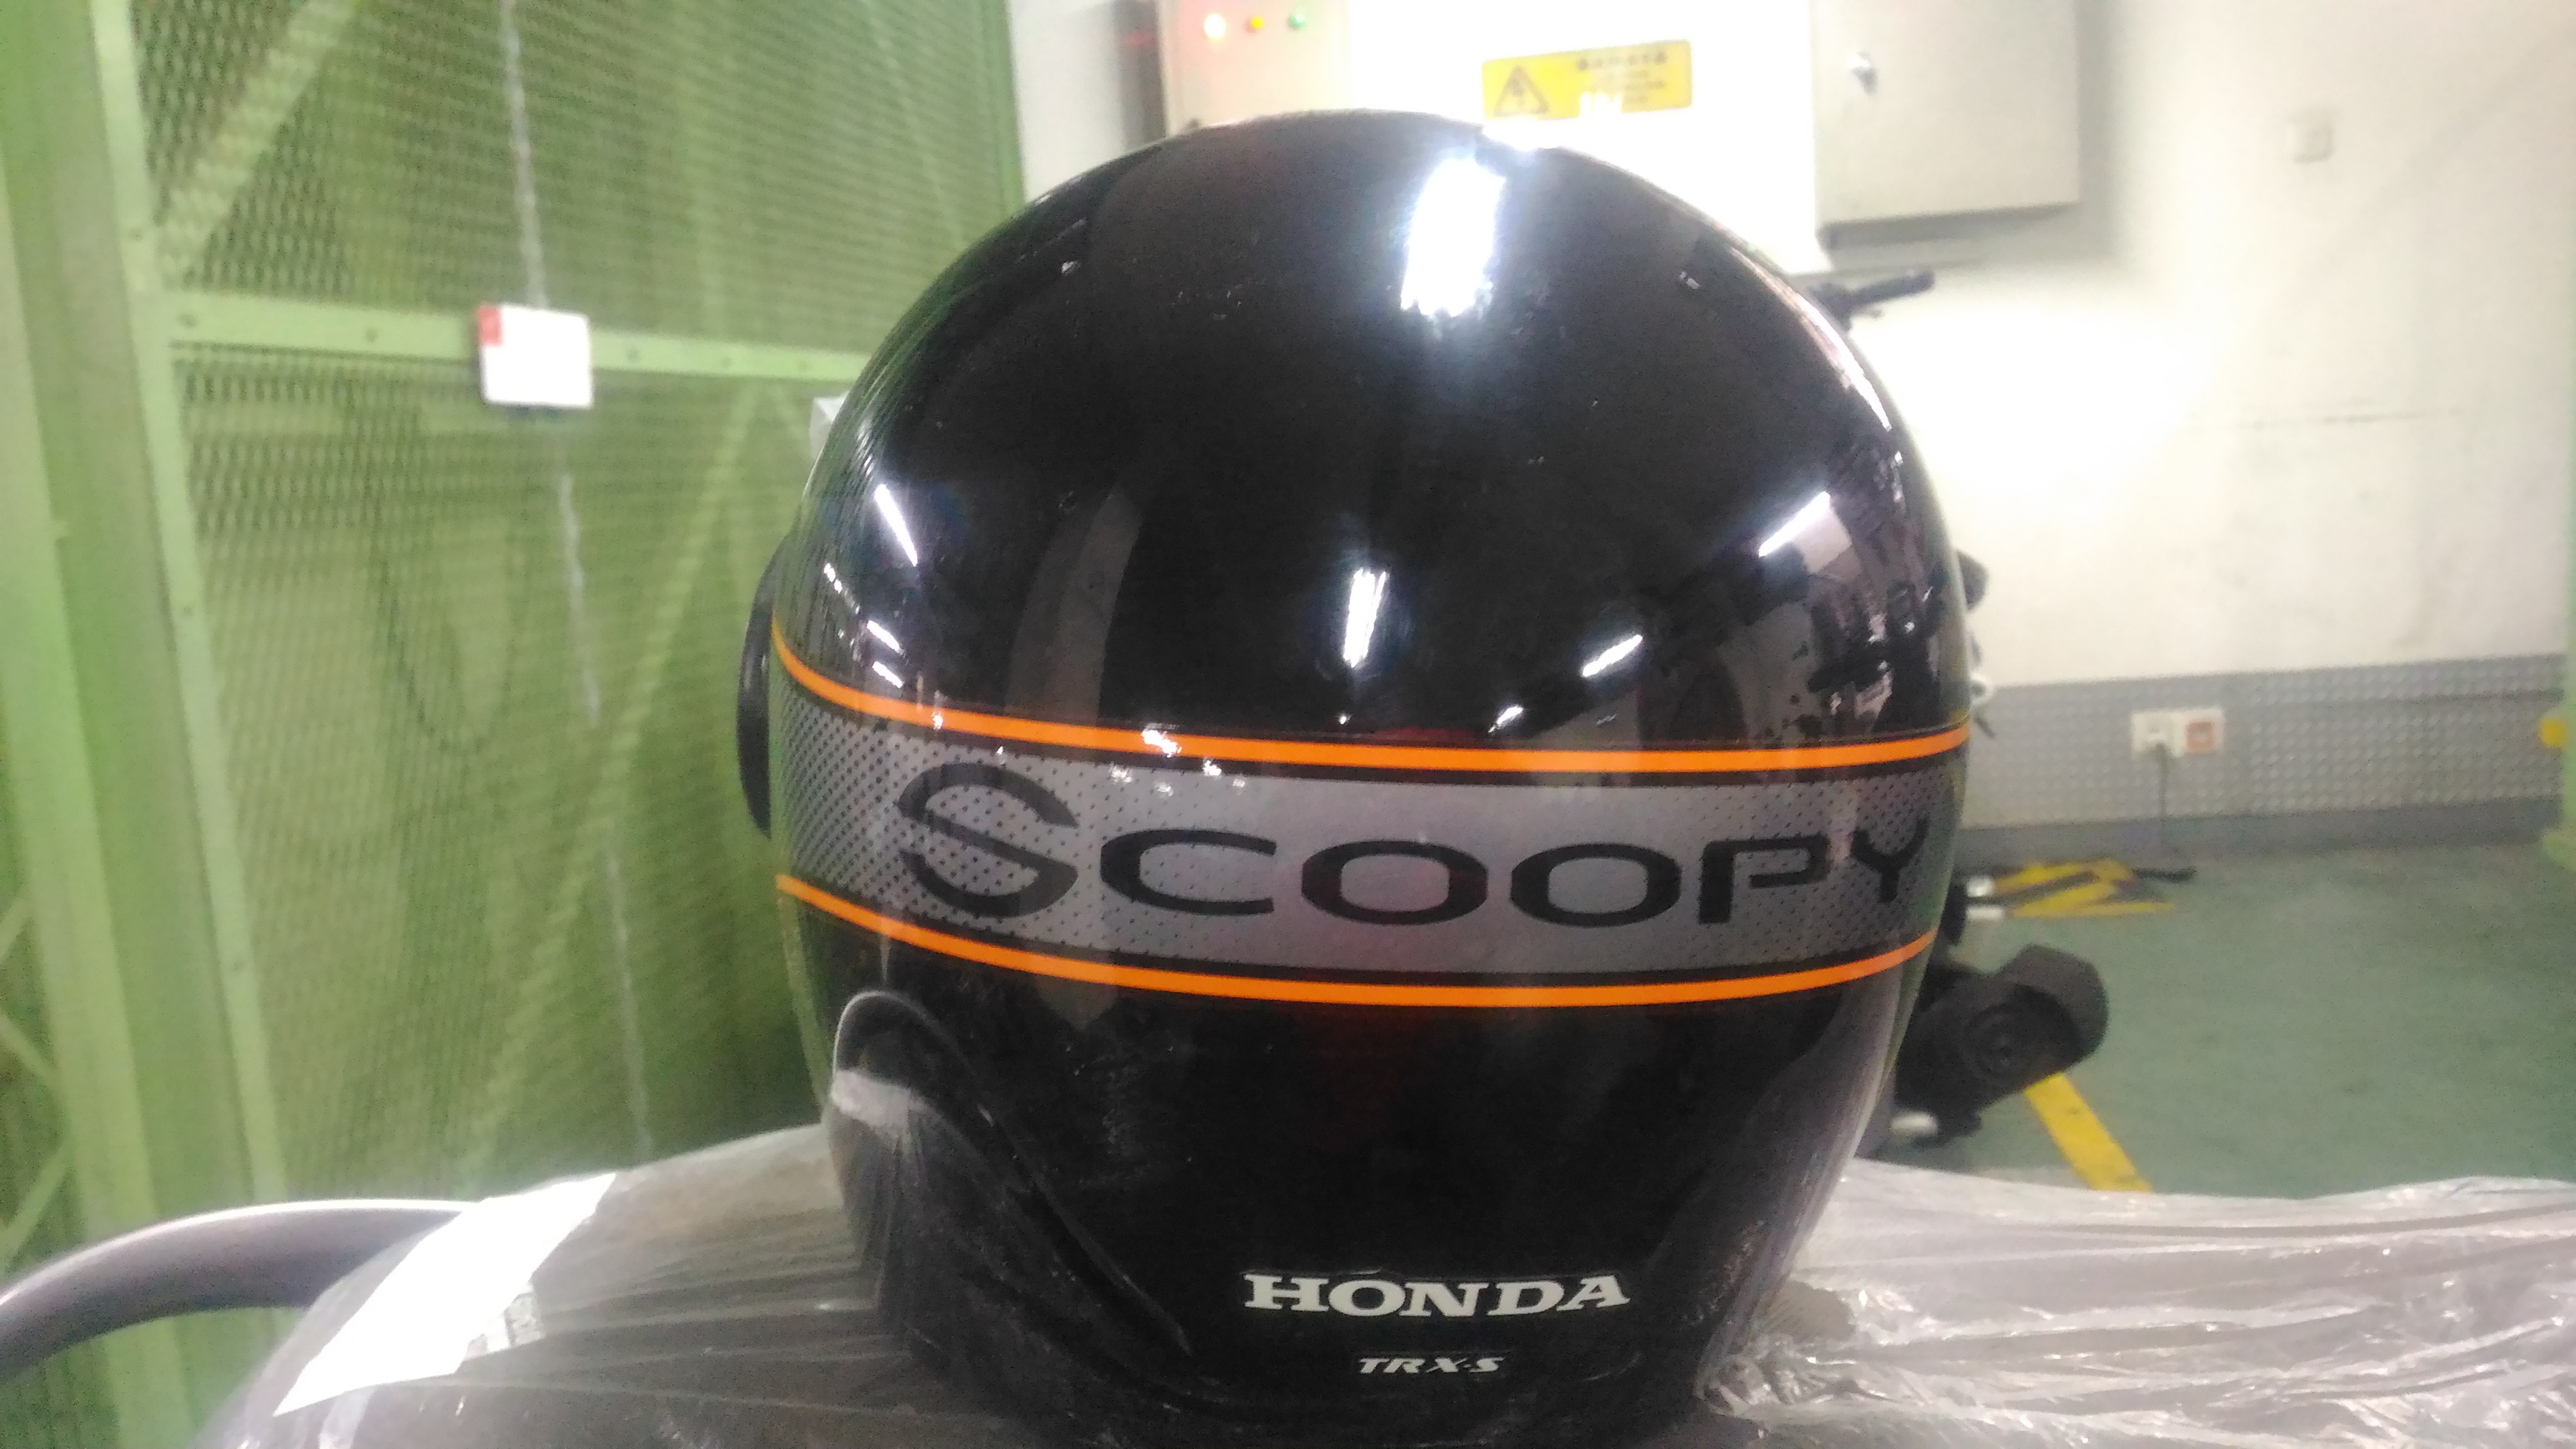 84 Modifikasi Helm Scoopy Kumpulan Modifikasi Motor Scoopy Terbaru